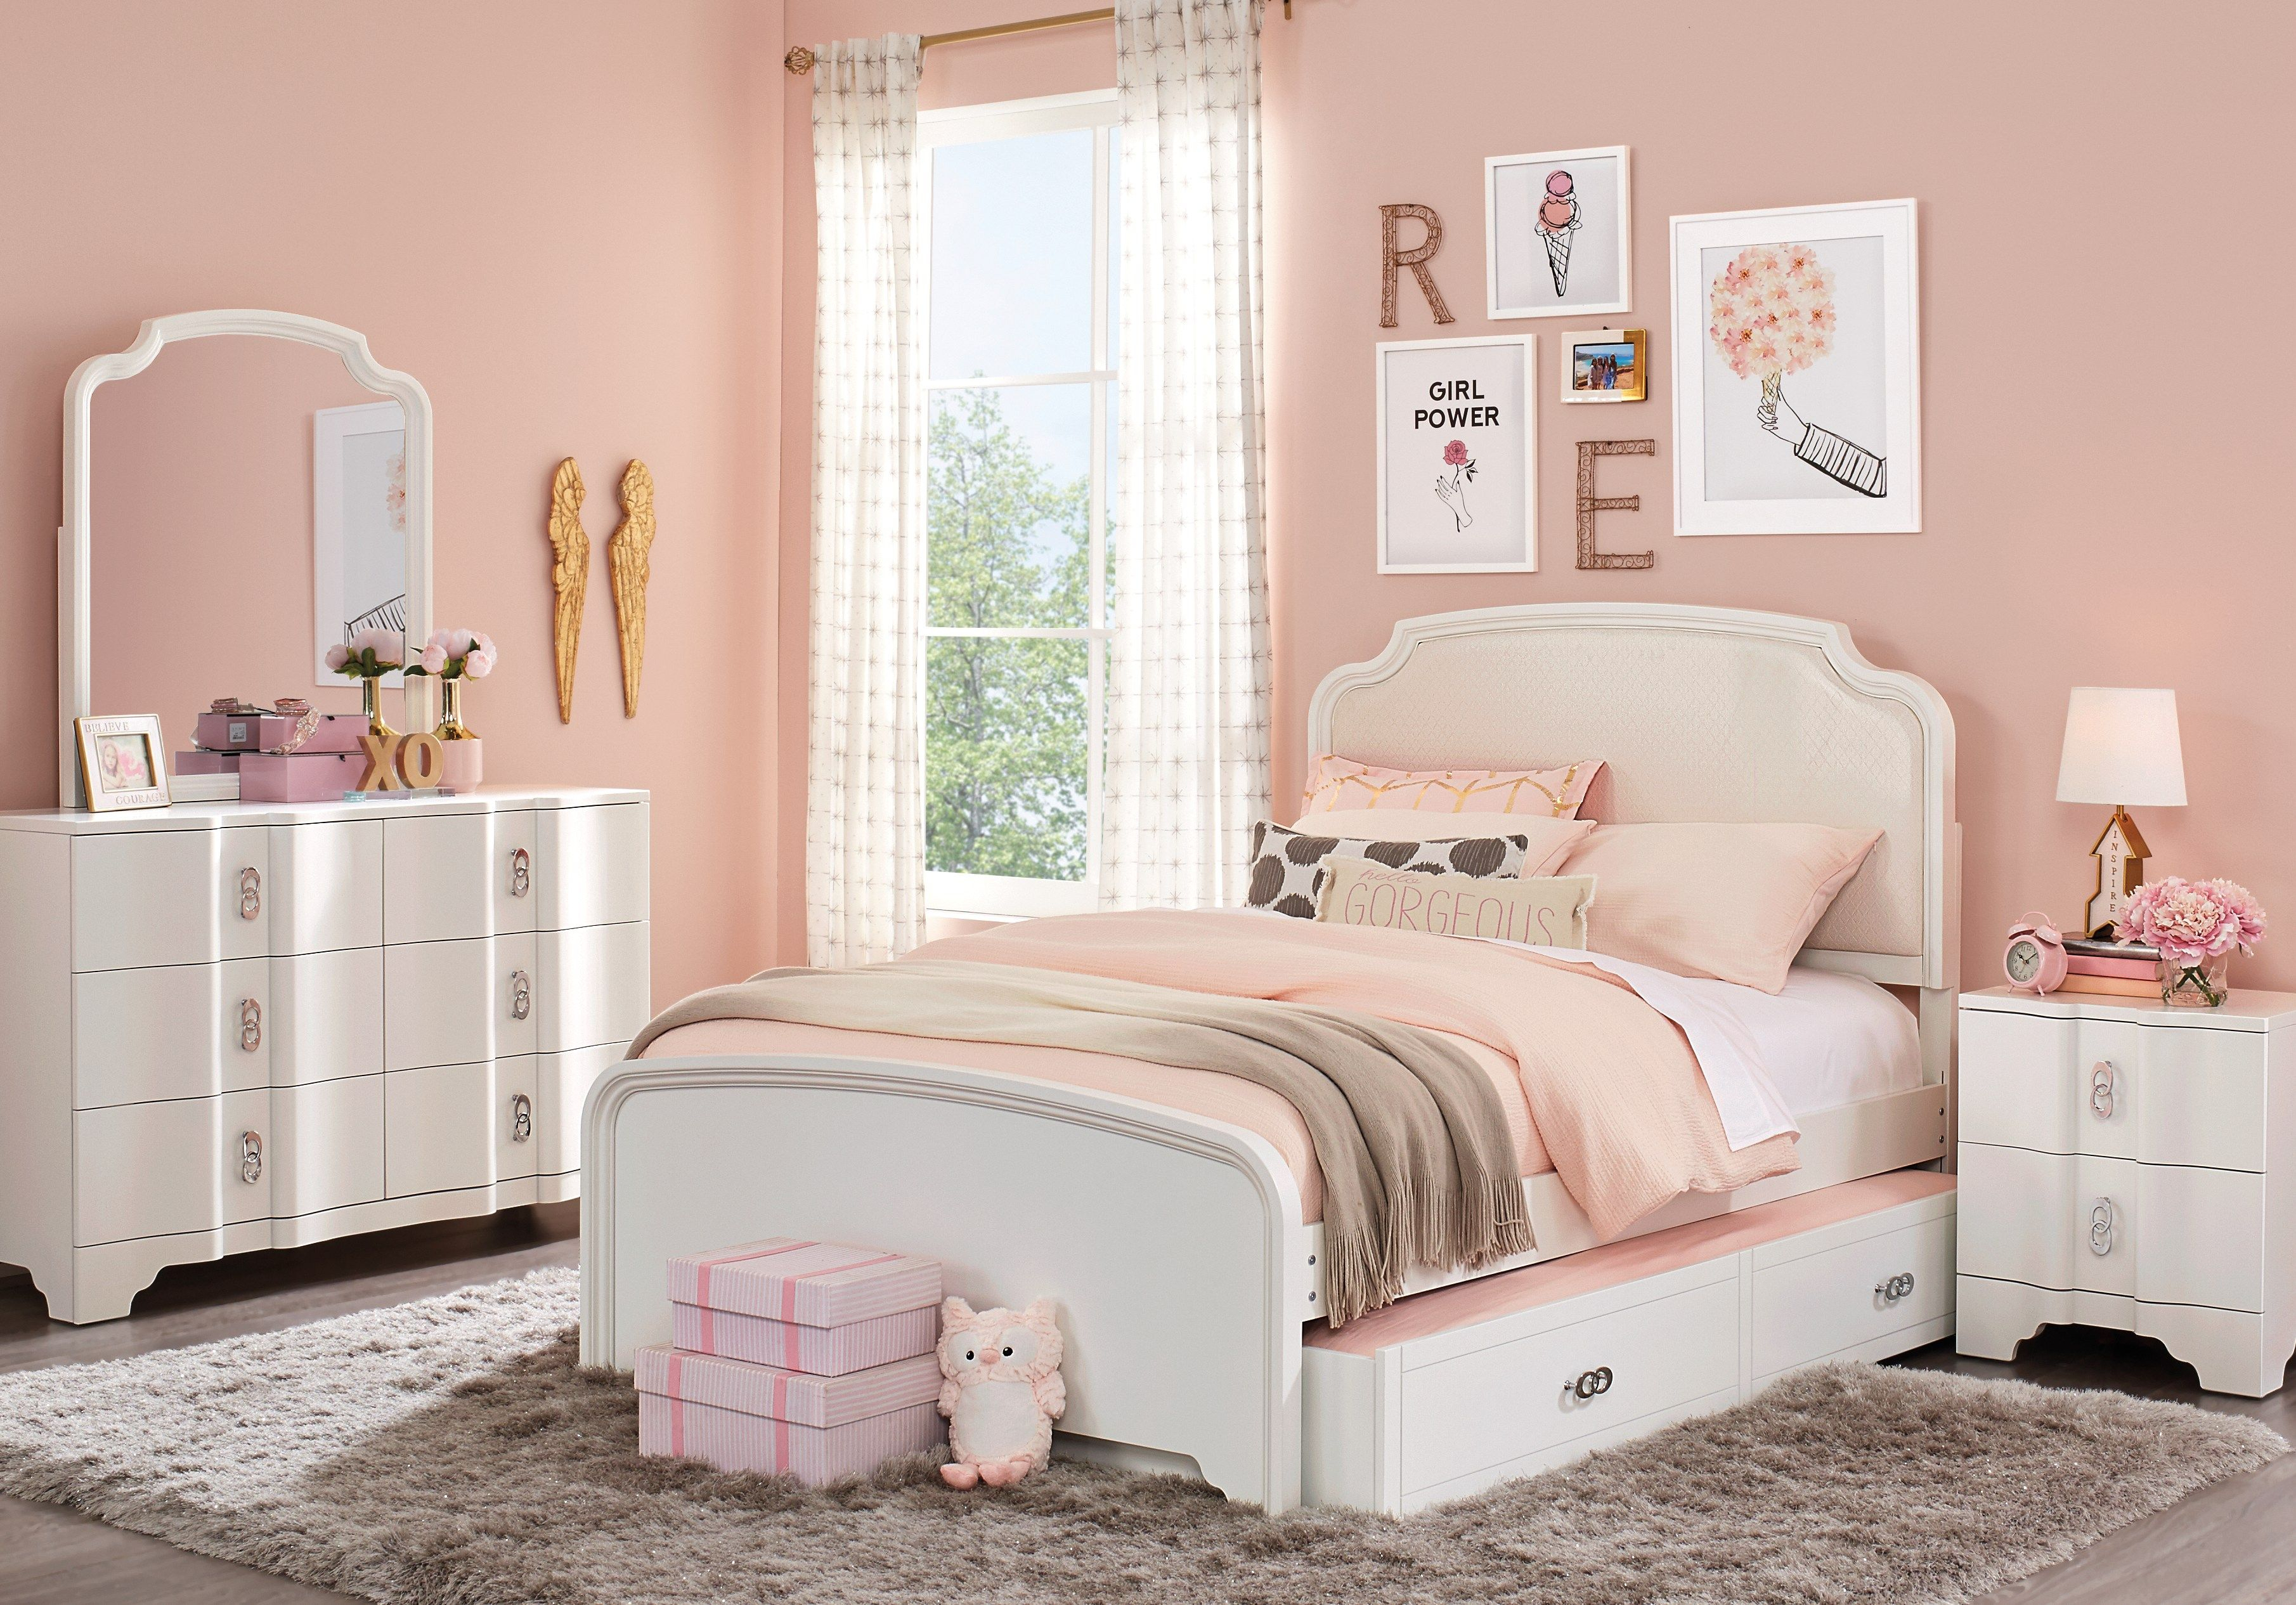 Rylee White 5 Pc Full Upholstered Bedroom Teen Bedroom Sets Colors inside size 3621 X 2531